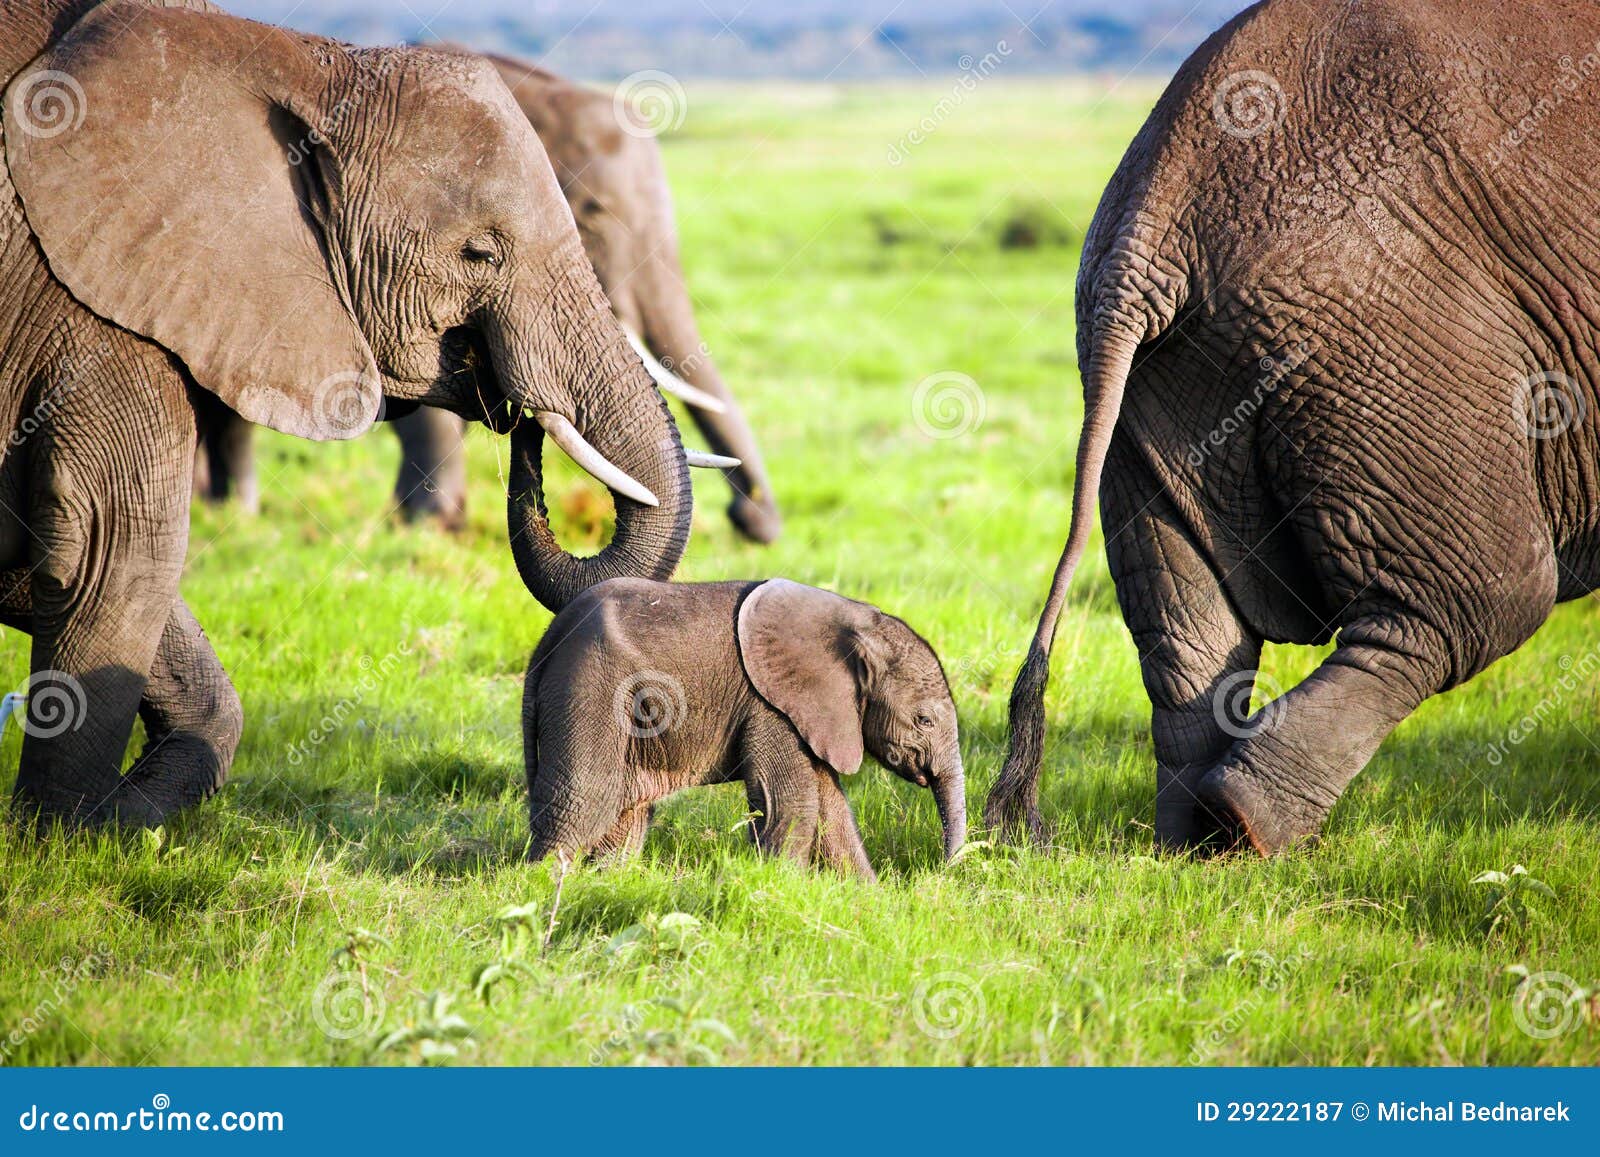 elephants family on savanna. safari in amboseli, kenya, africa